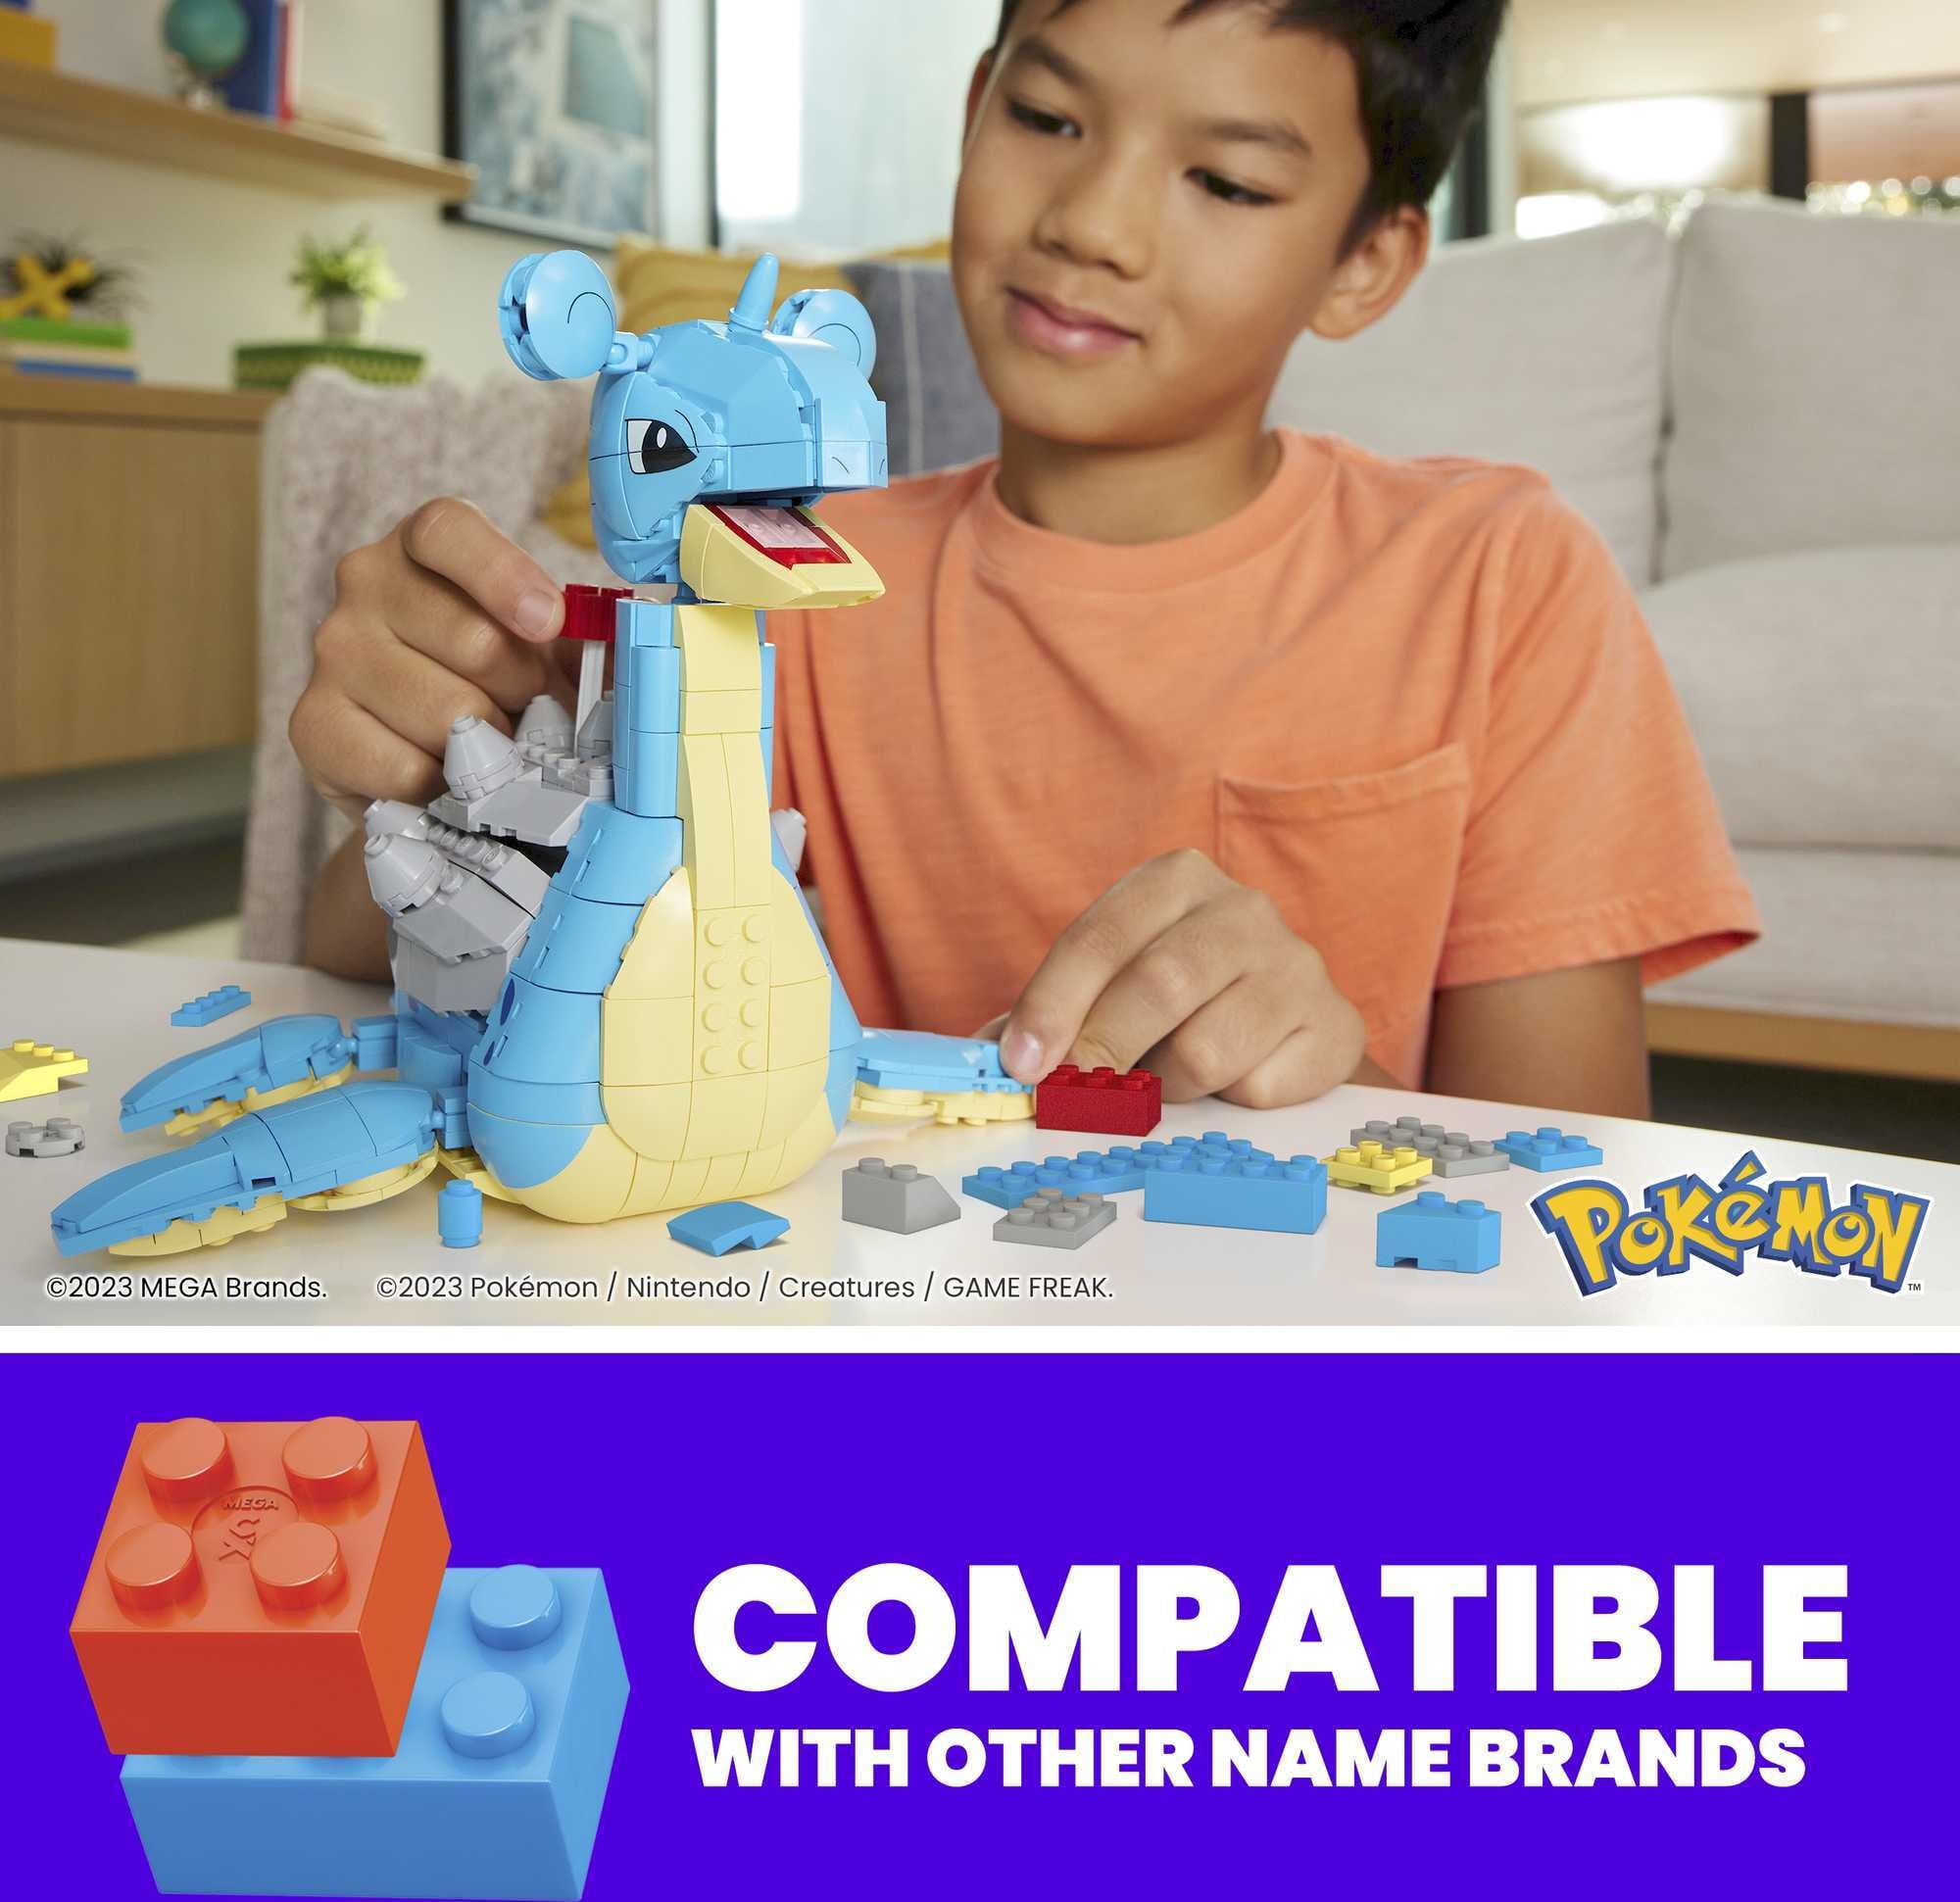 Mattel - Pokemon - Blocos de construção Pokémon Lapras ㅤ